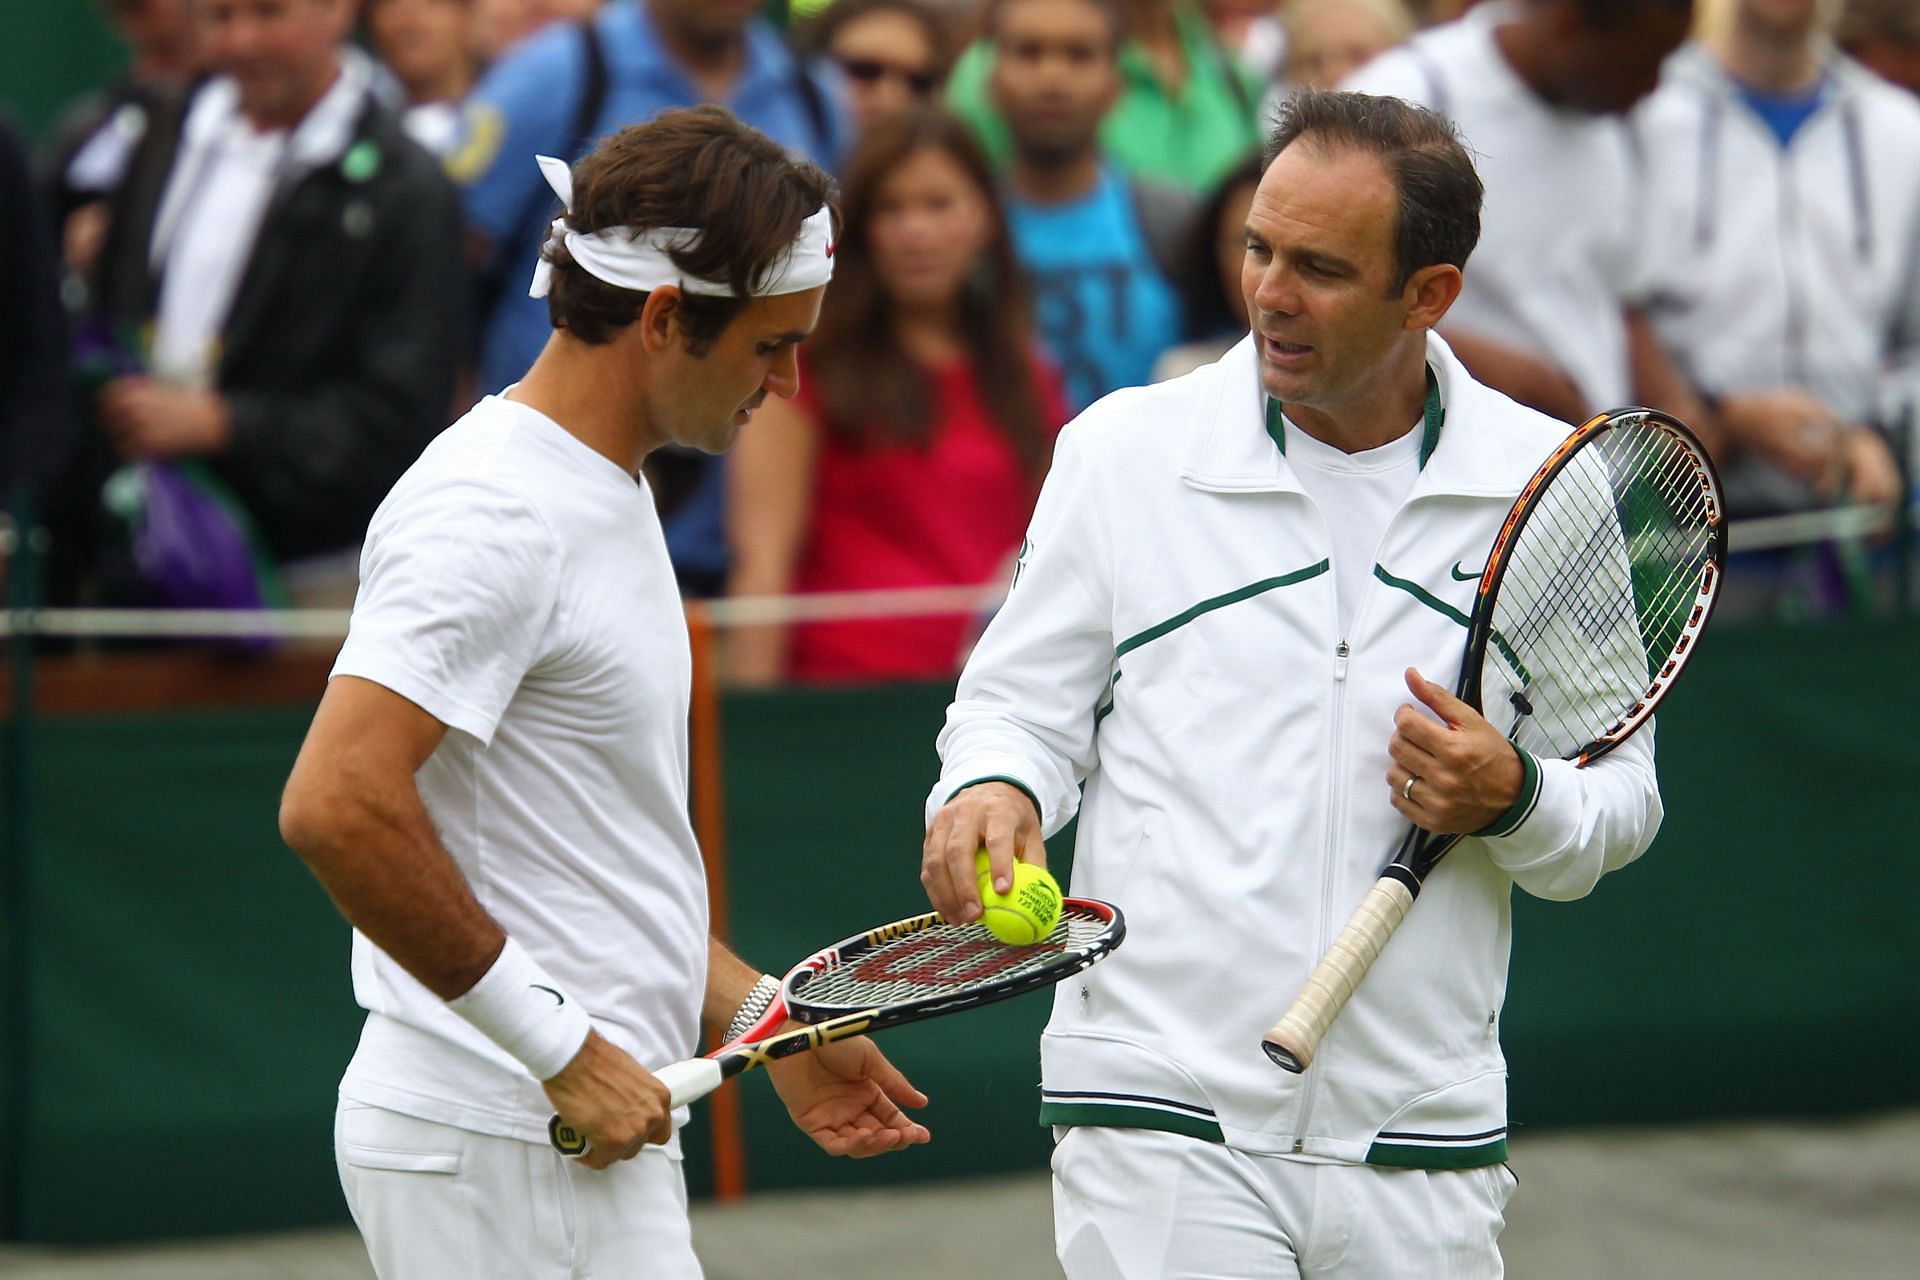 Paul Anancone trains Roger Federer during Wimbledon 2011